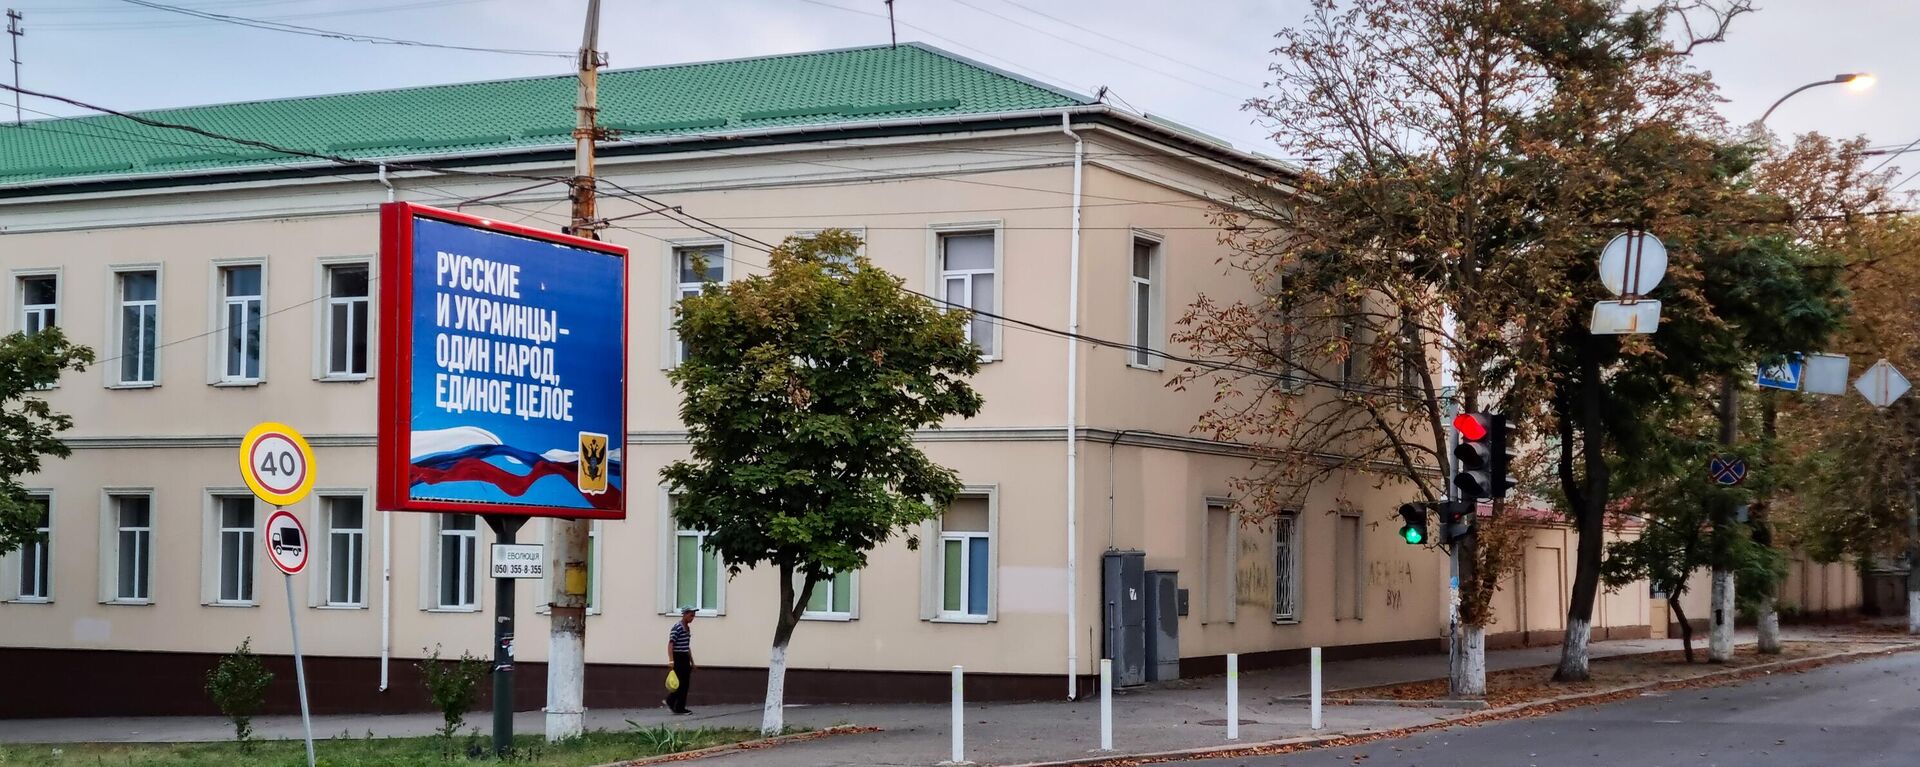 Билборд на улице в Херсоне. - Sputnik Абхазия, 1920, 20.09.2022